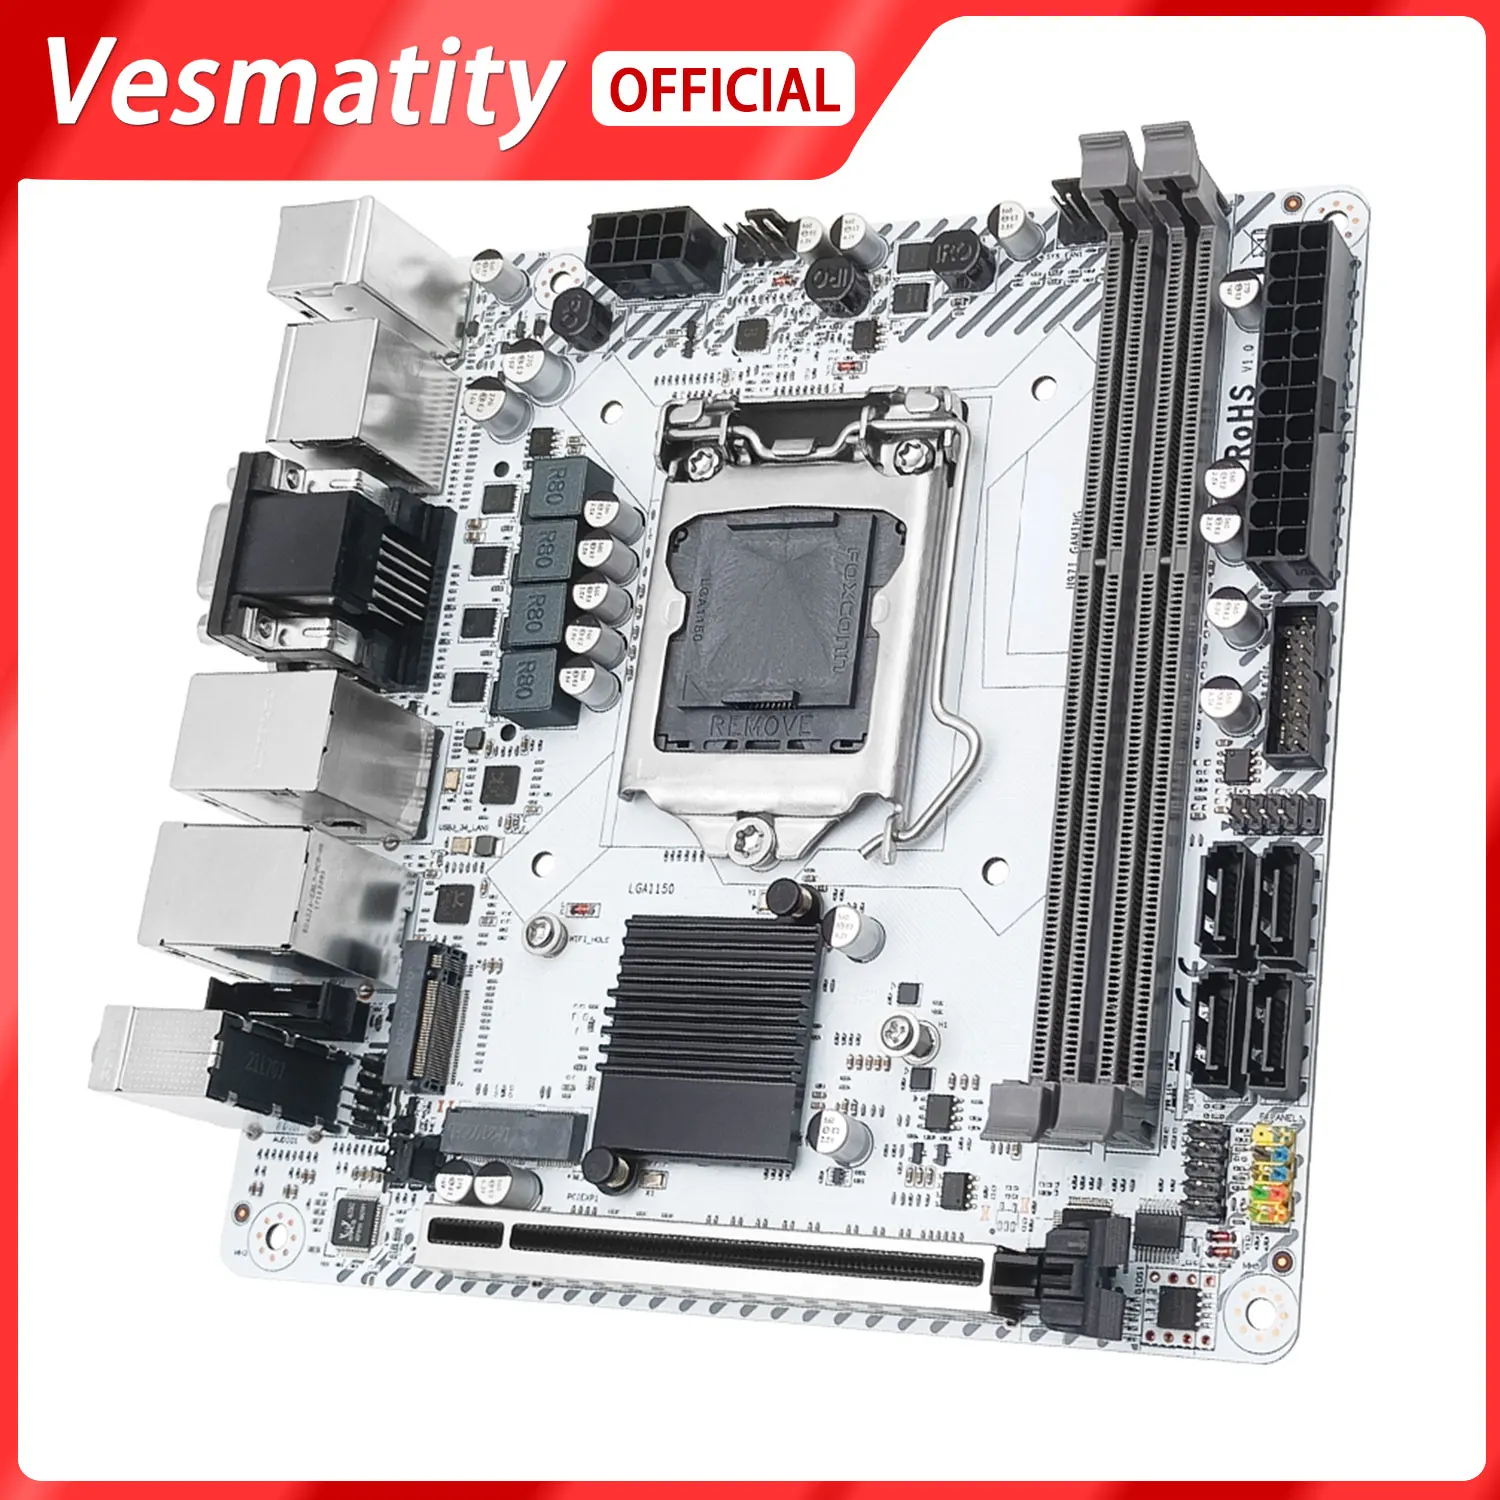 

H97I GAMING Motherboard Suppor LGA 1150 CPU Core and Xeon E3 Processor DDR3 RAM VGA+HDMI+DP Video Interface Mini-ITX